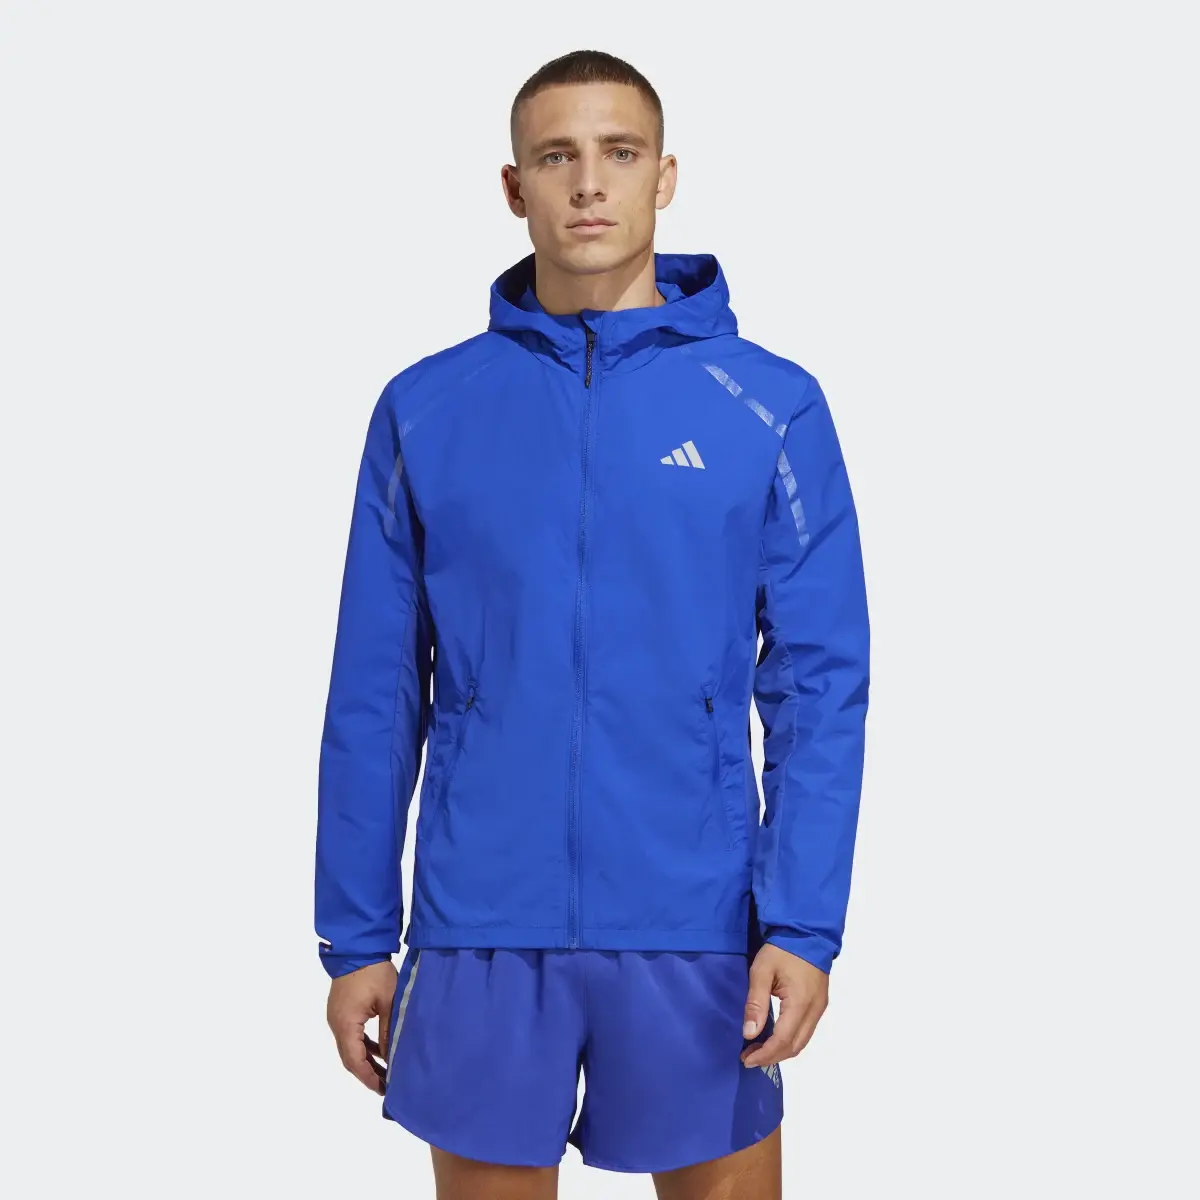 Adidas Marathon Warm-Up Running Jacket. 2